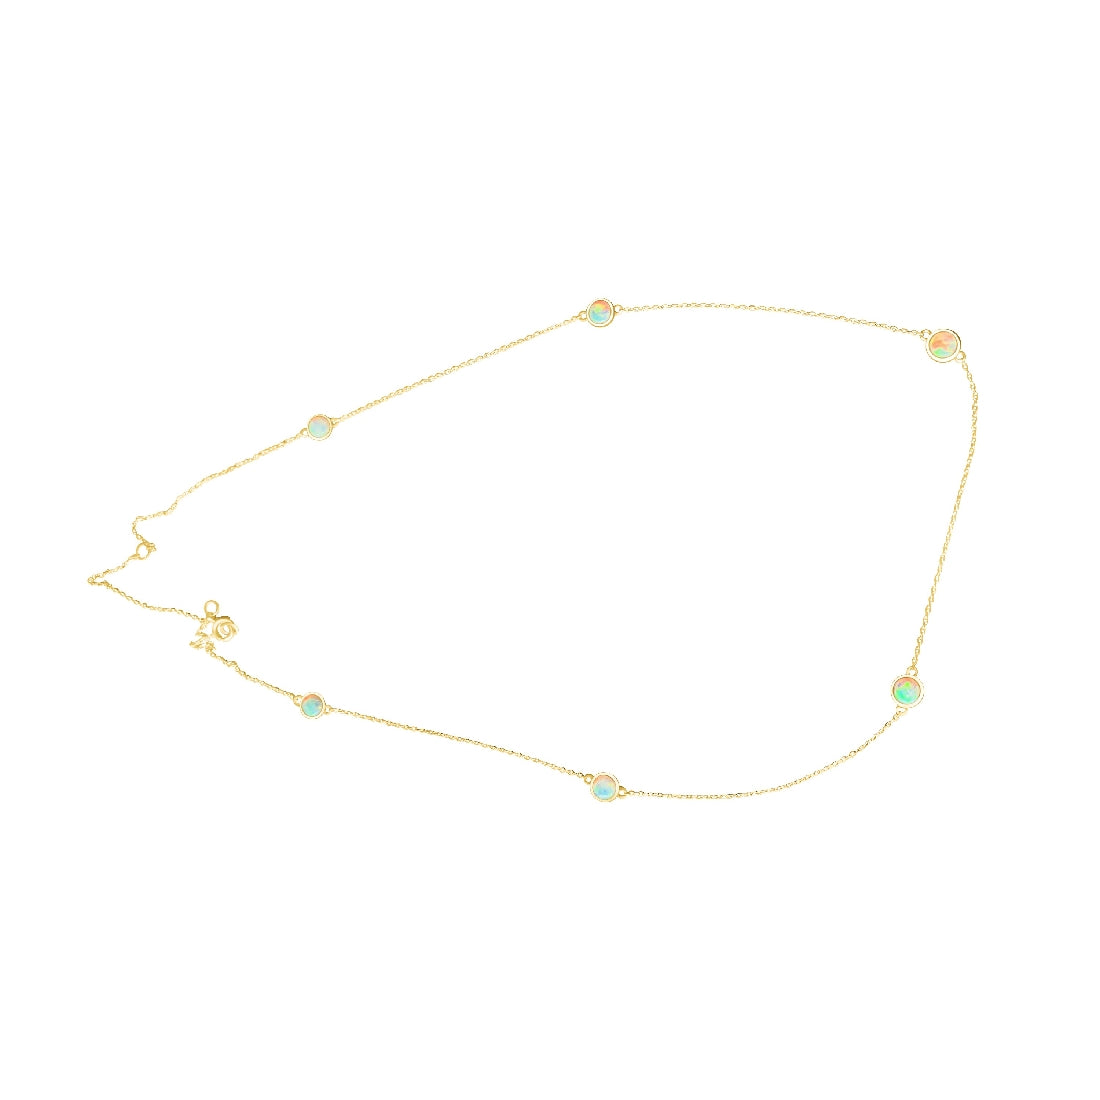 9kt Yellow Gold necklace white Opal spacer - Masterpiece Jewellery Opal & Gems Sydney Australia | Online Shop